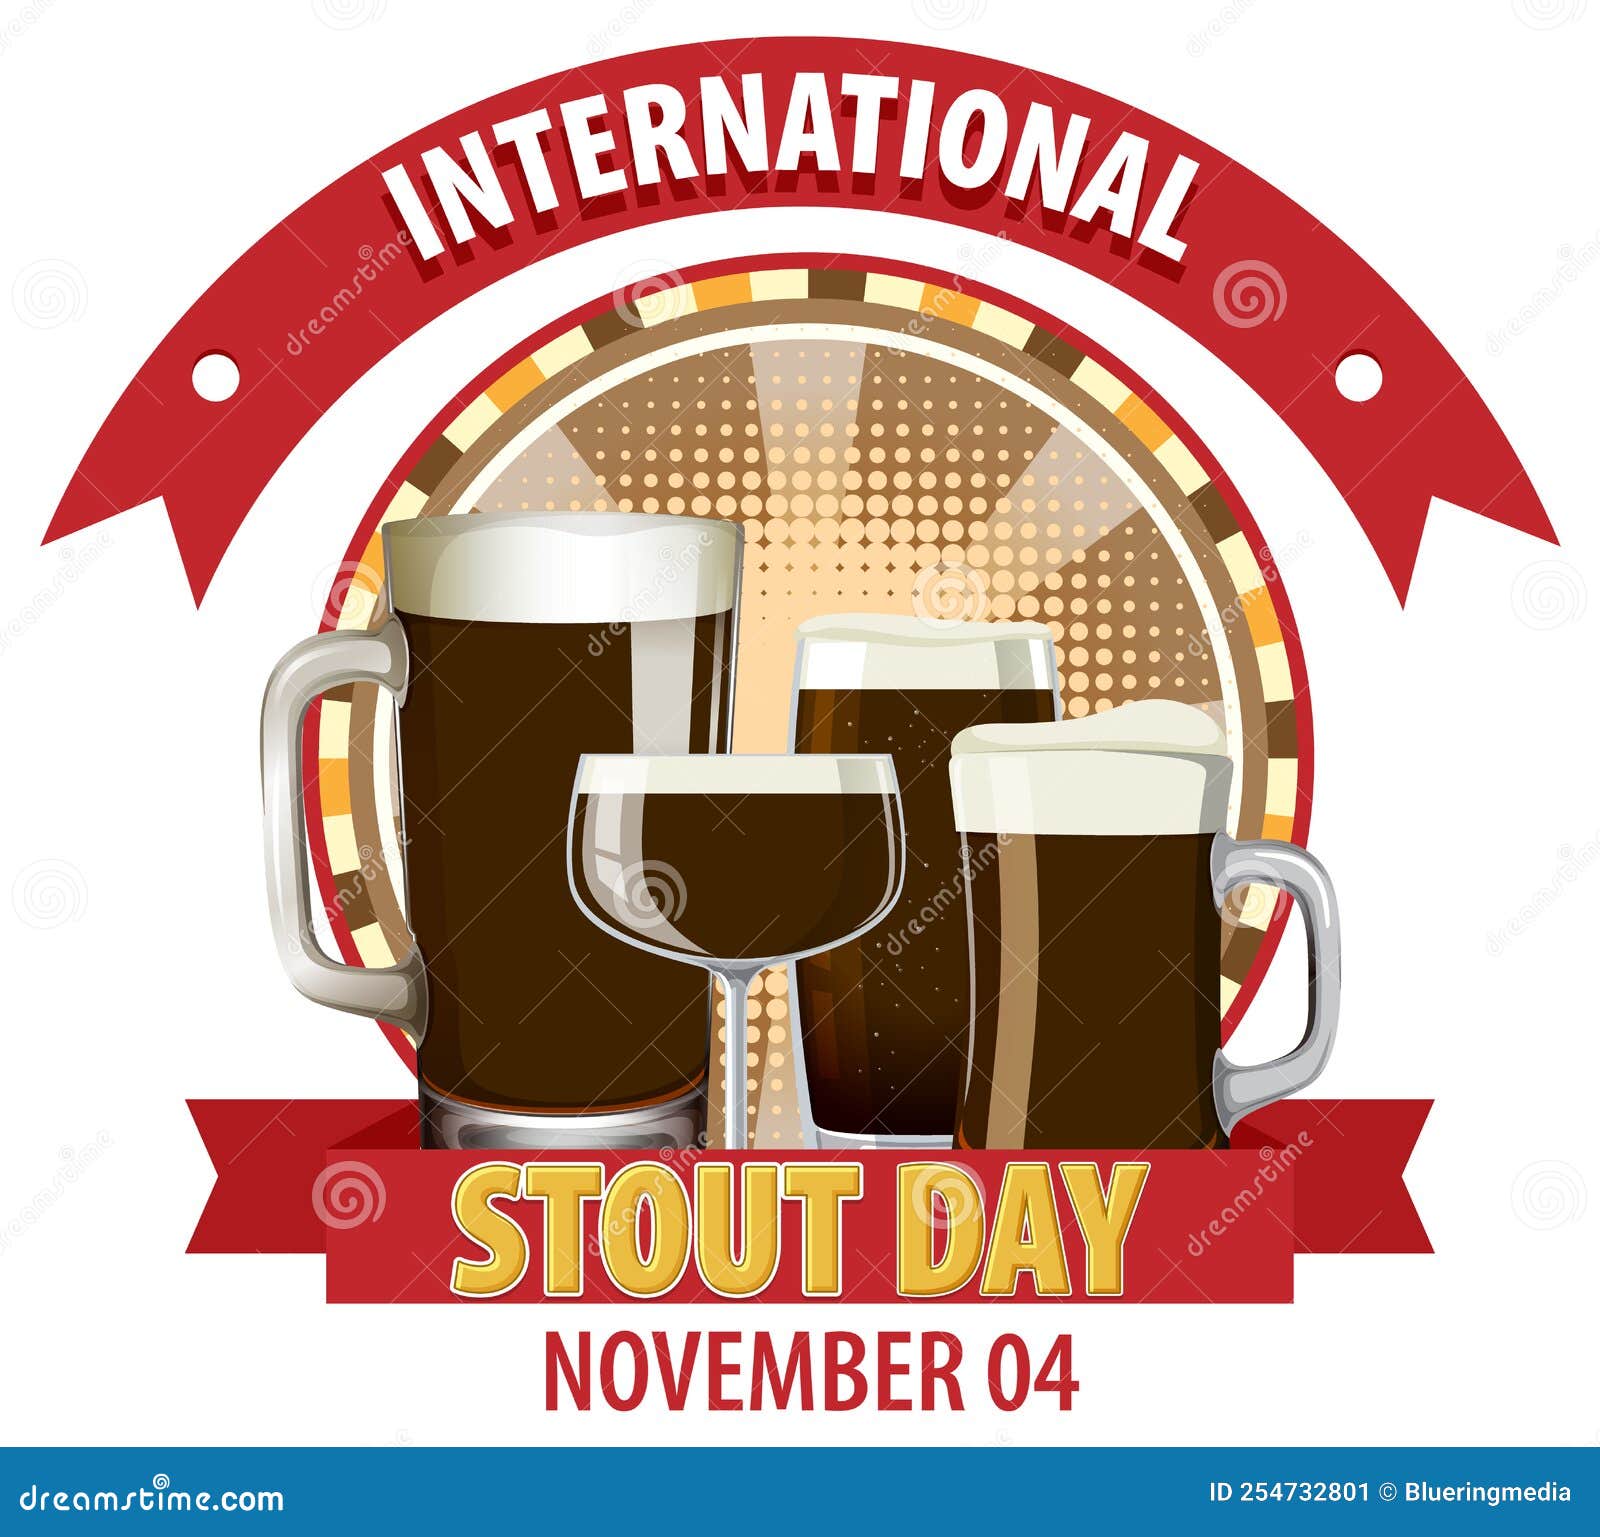 International Stout Day Banner Design Stock Vector Illustration of